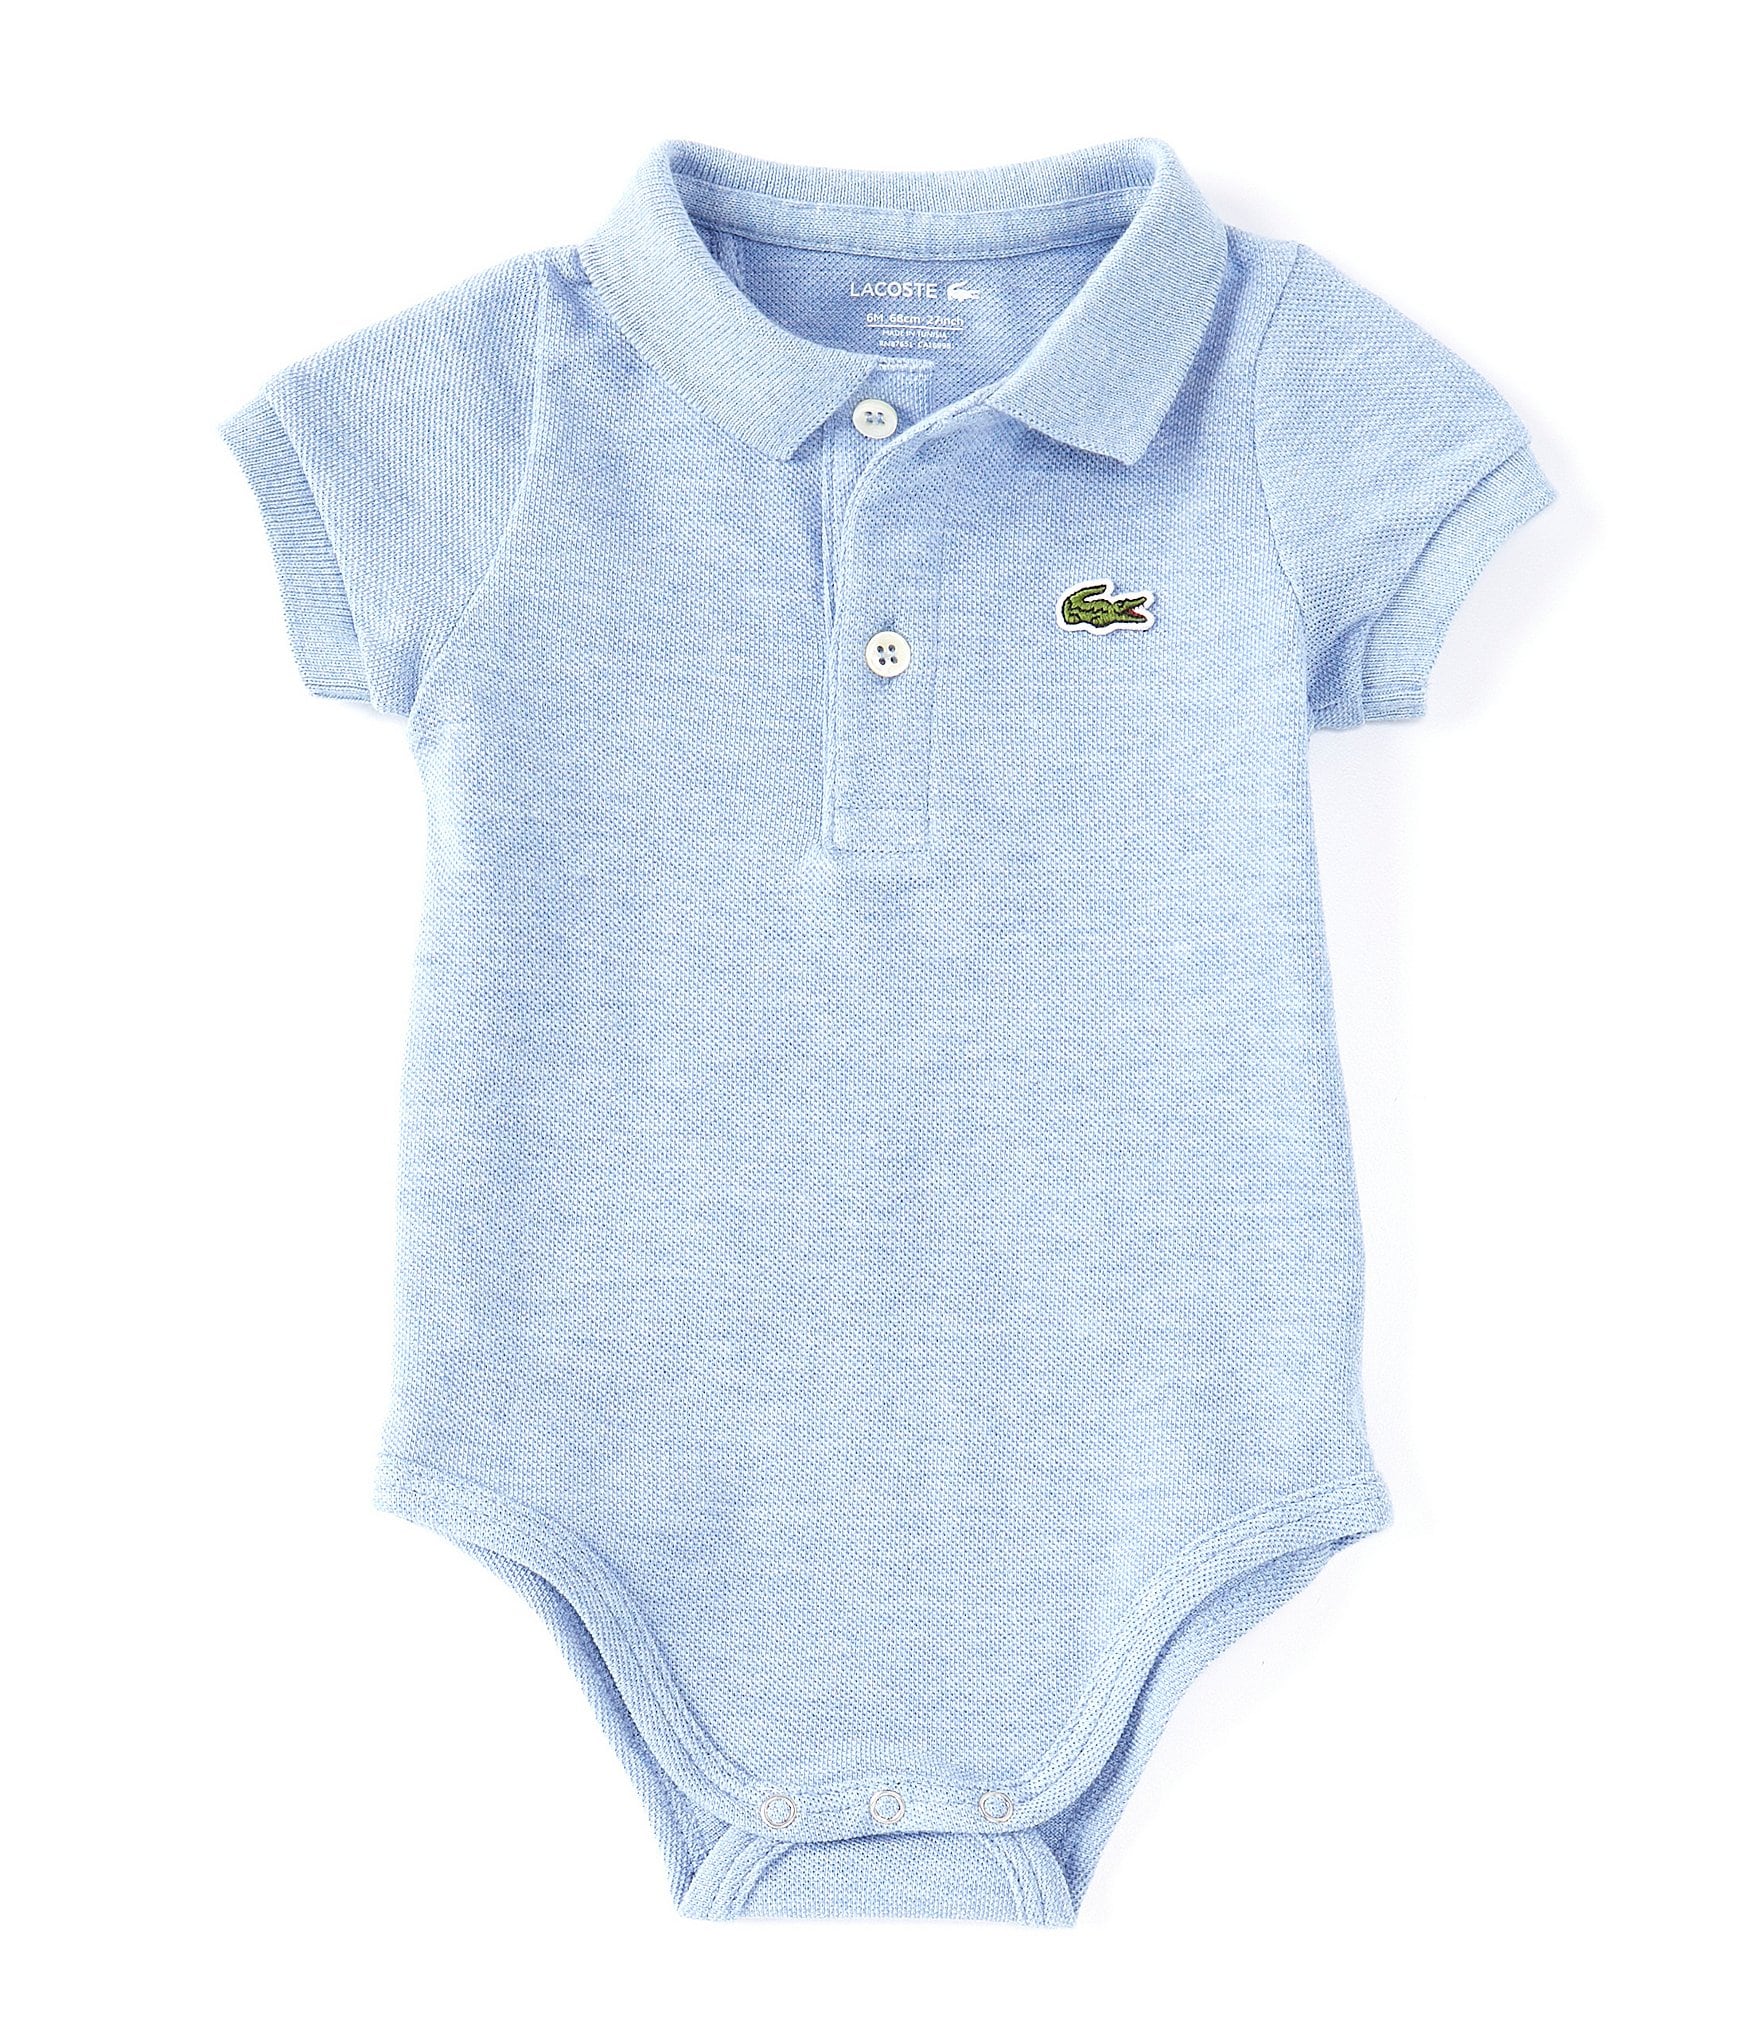 Baby Boys Clothes Months | Dillard's